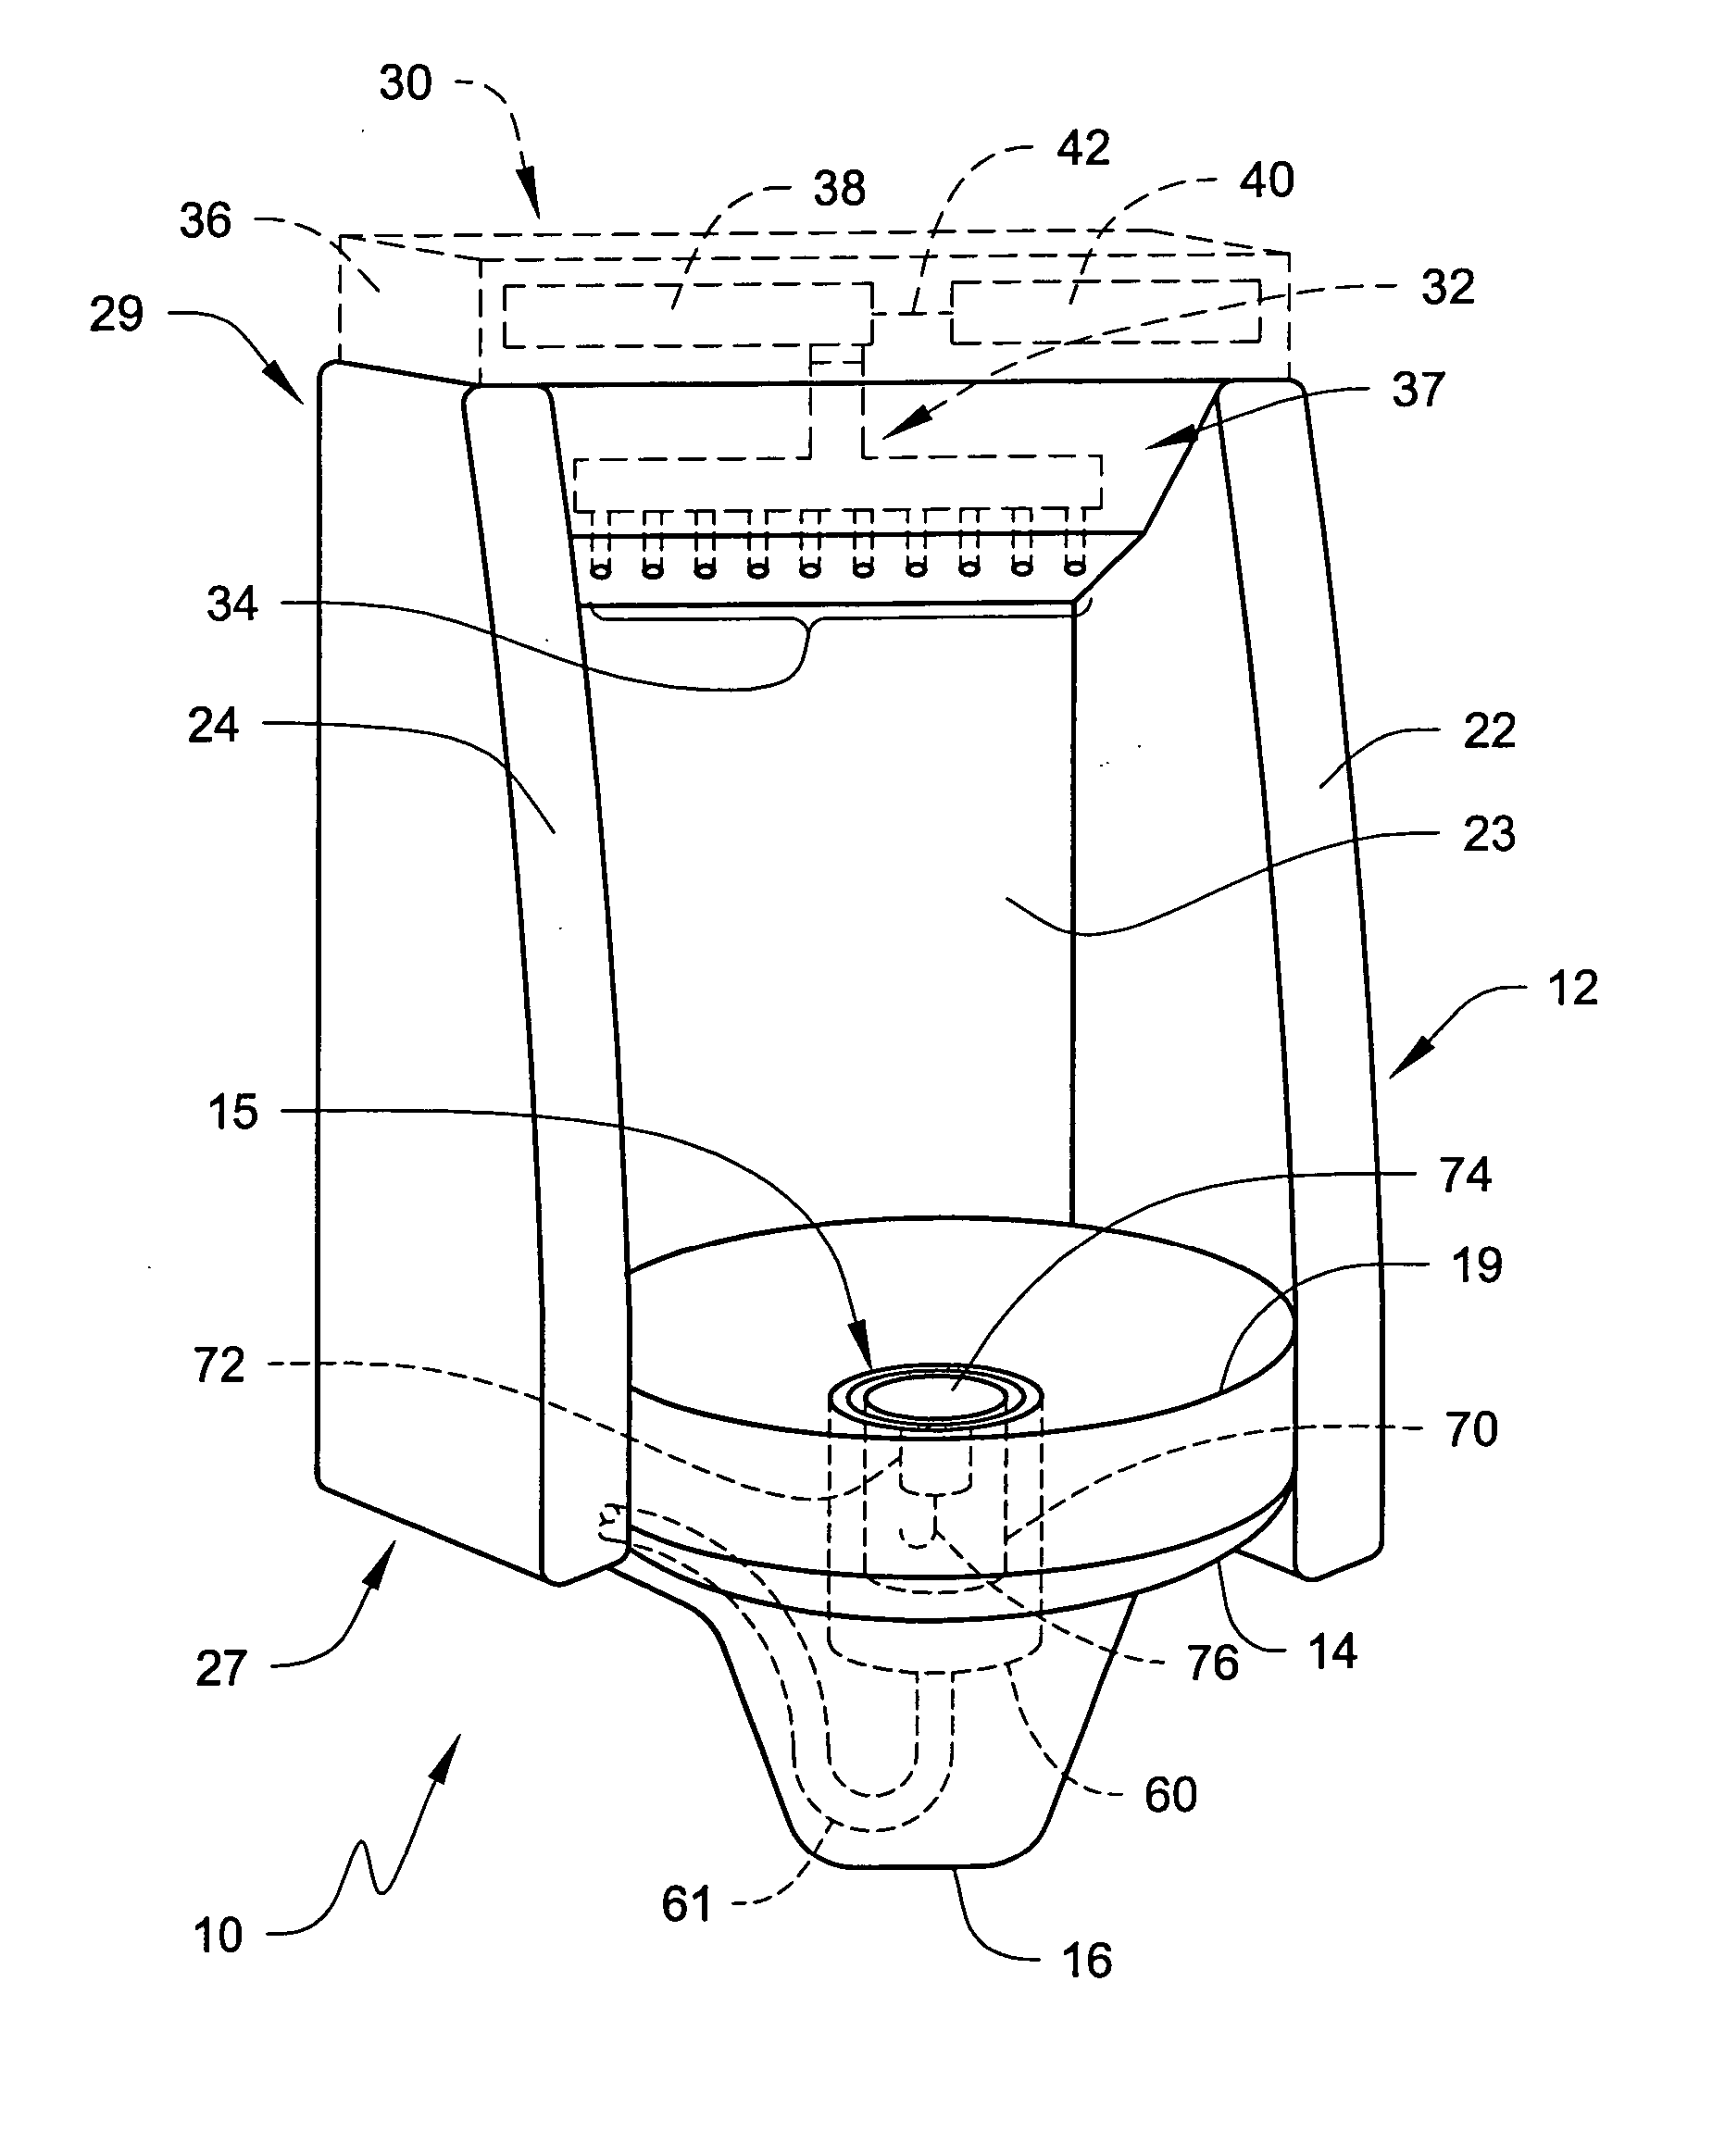 Cartridge apparatus for urinal